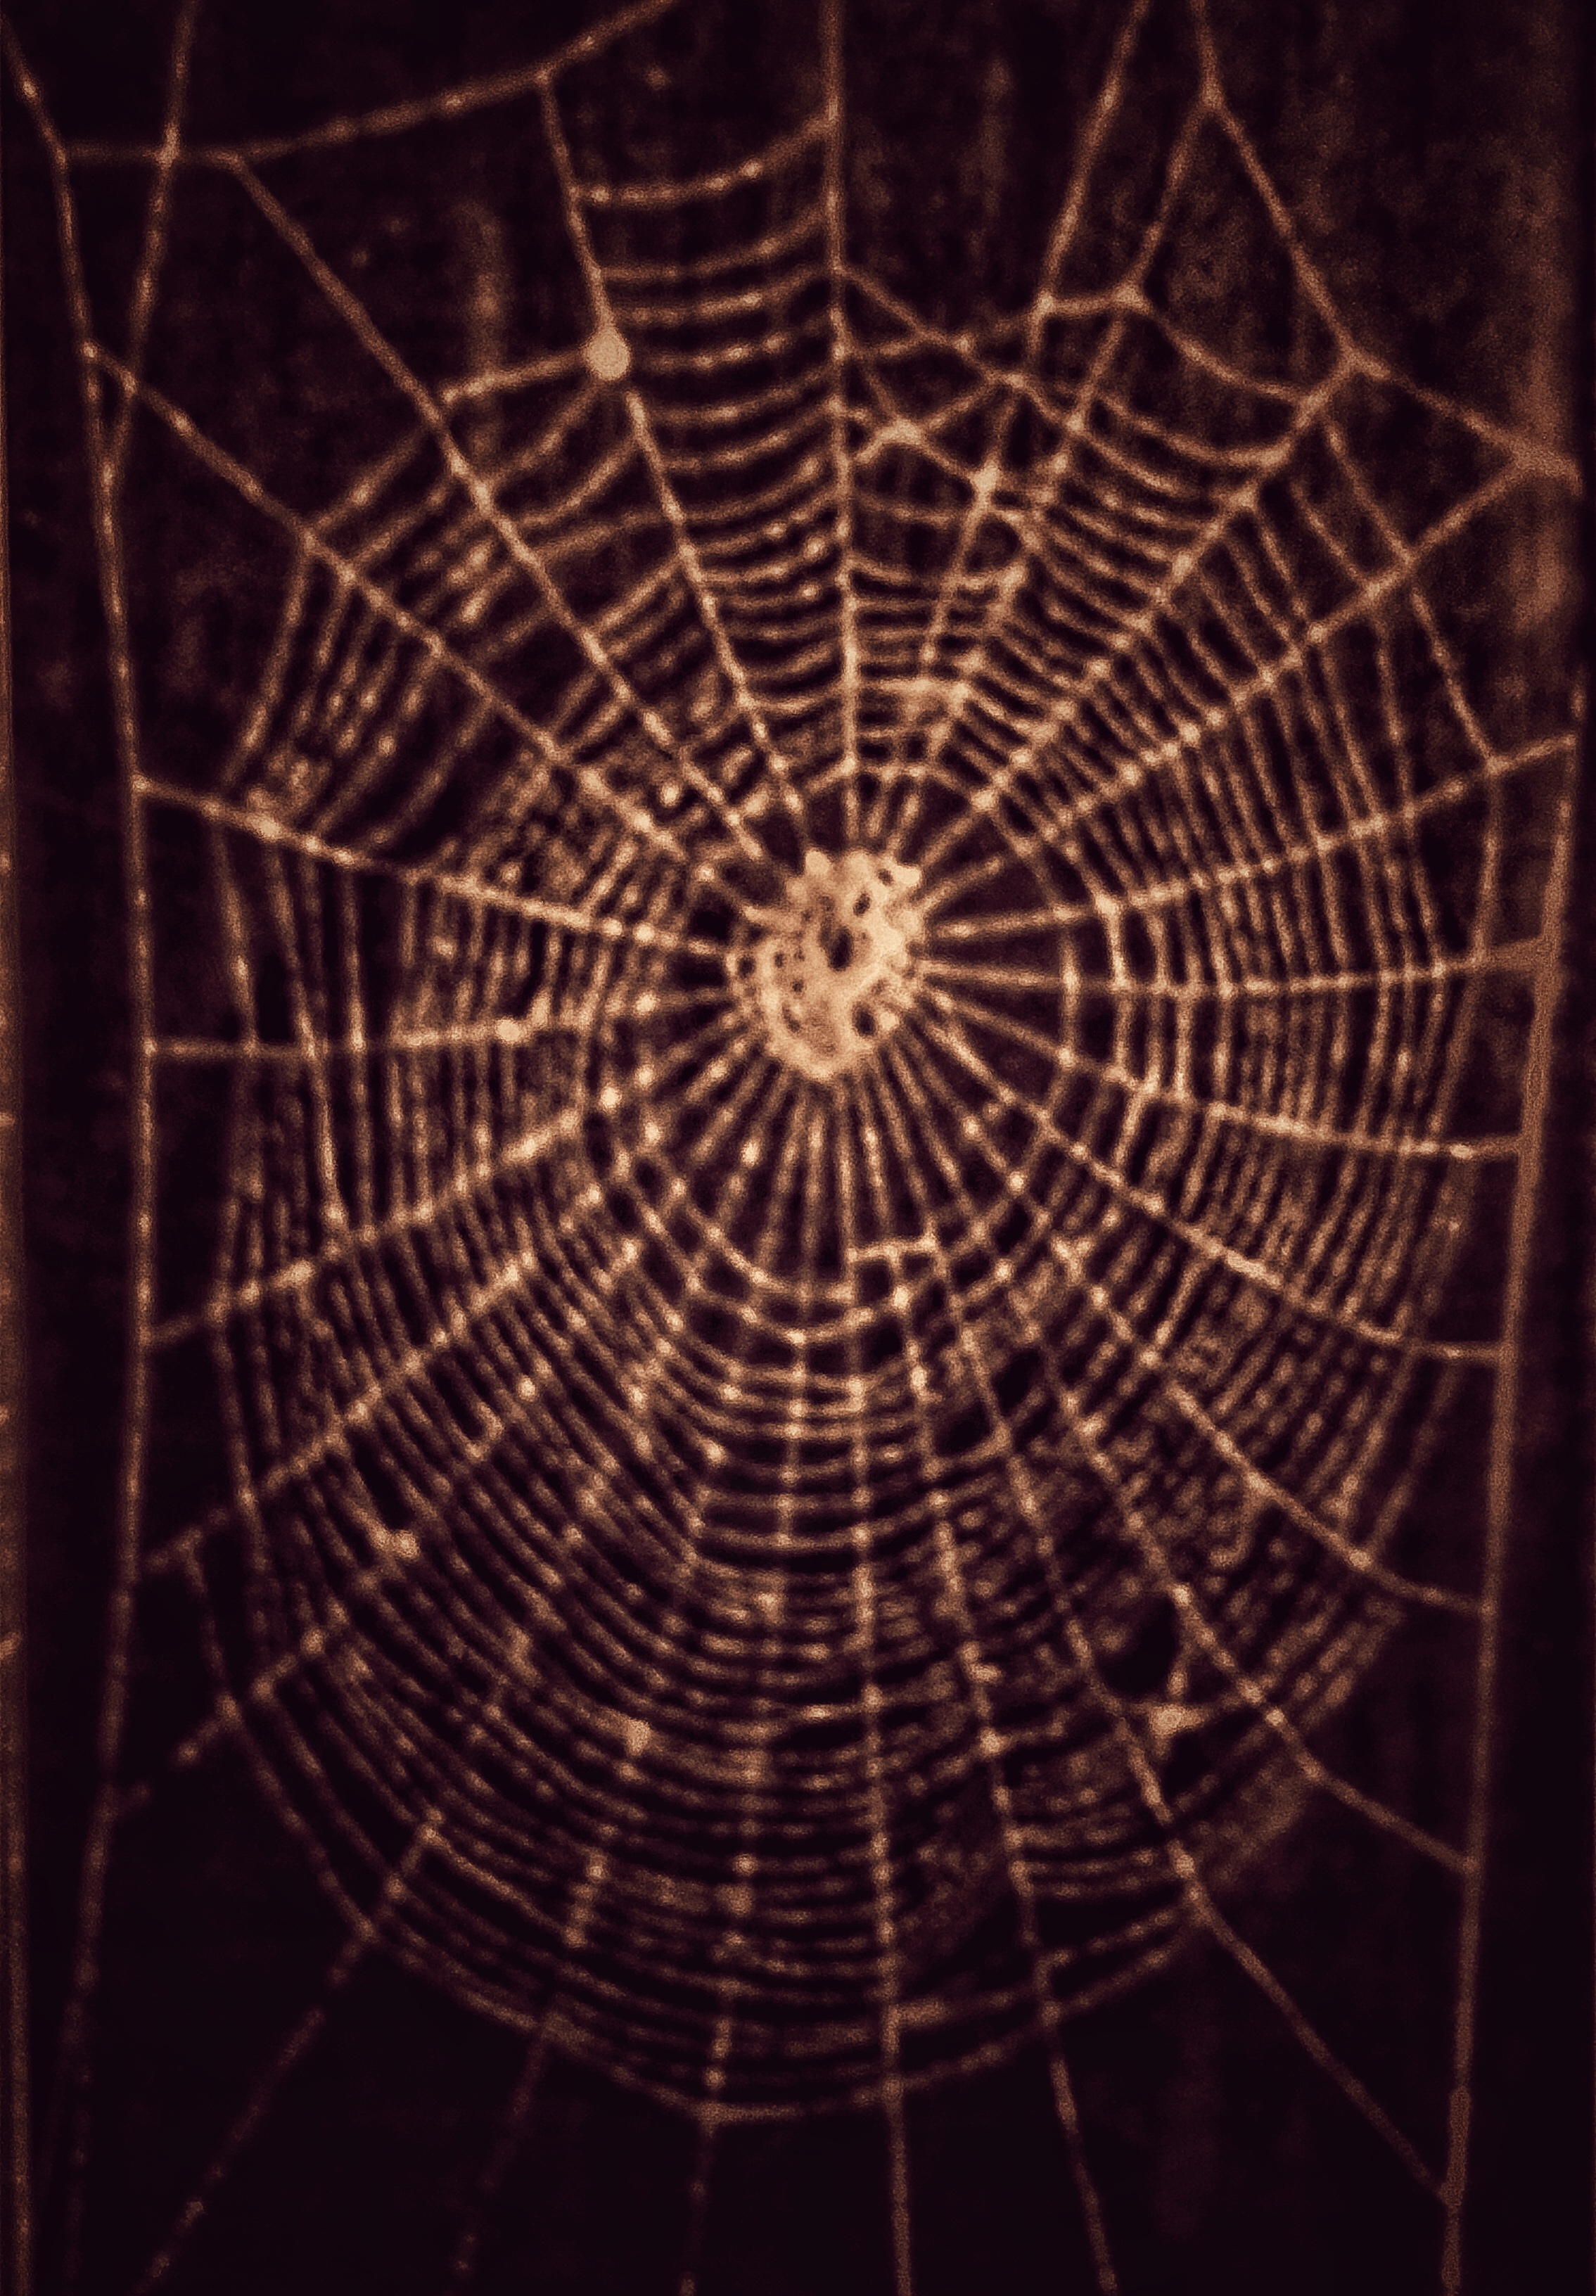 Spider Web on Woodcut